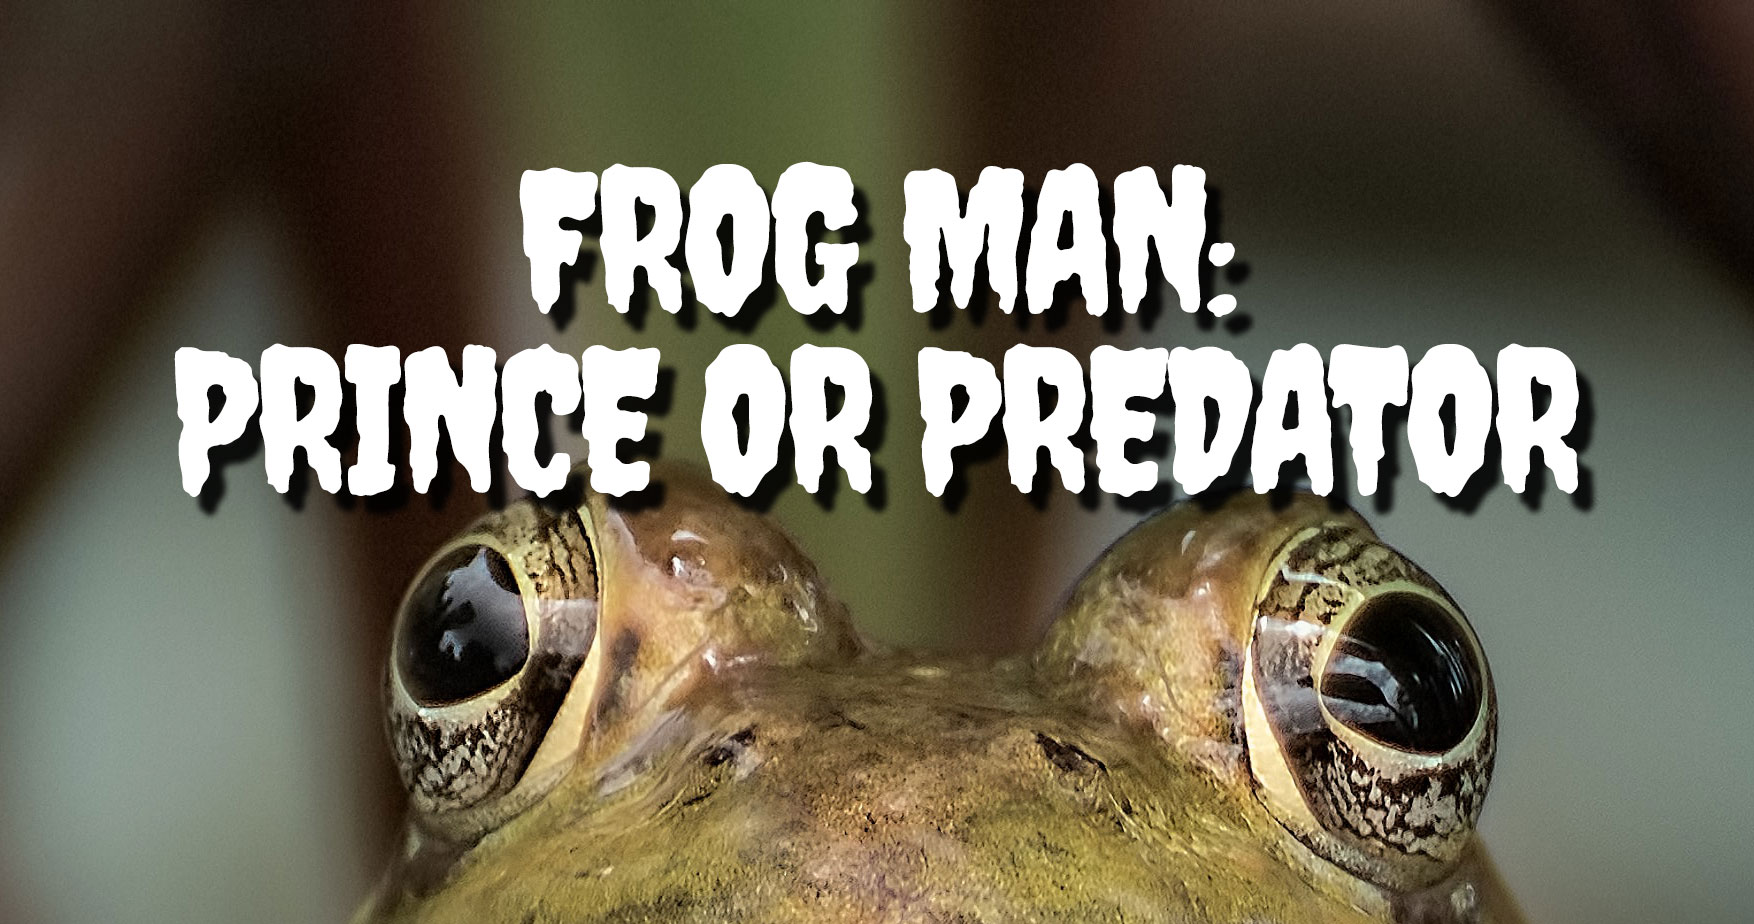 Frog Man: Prince or Predator by bailey.mccord